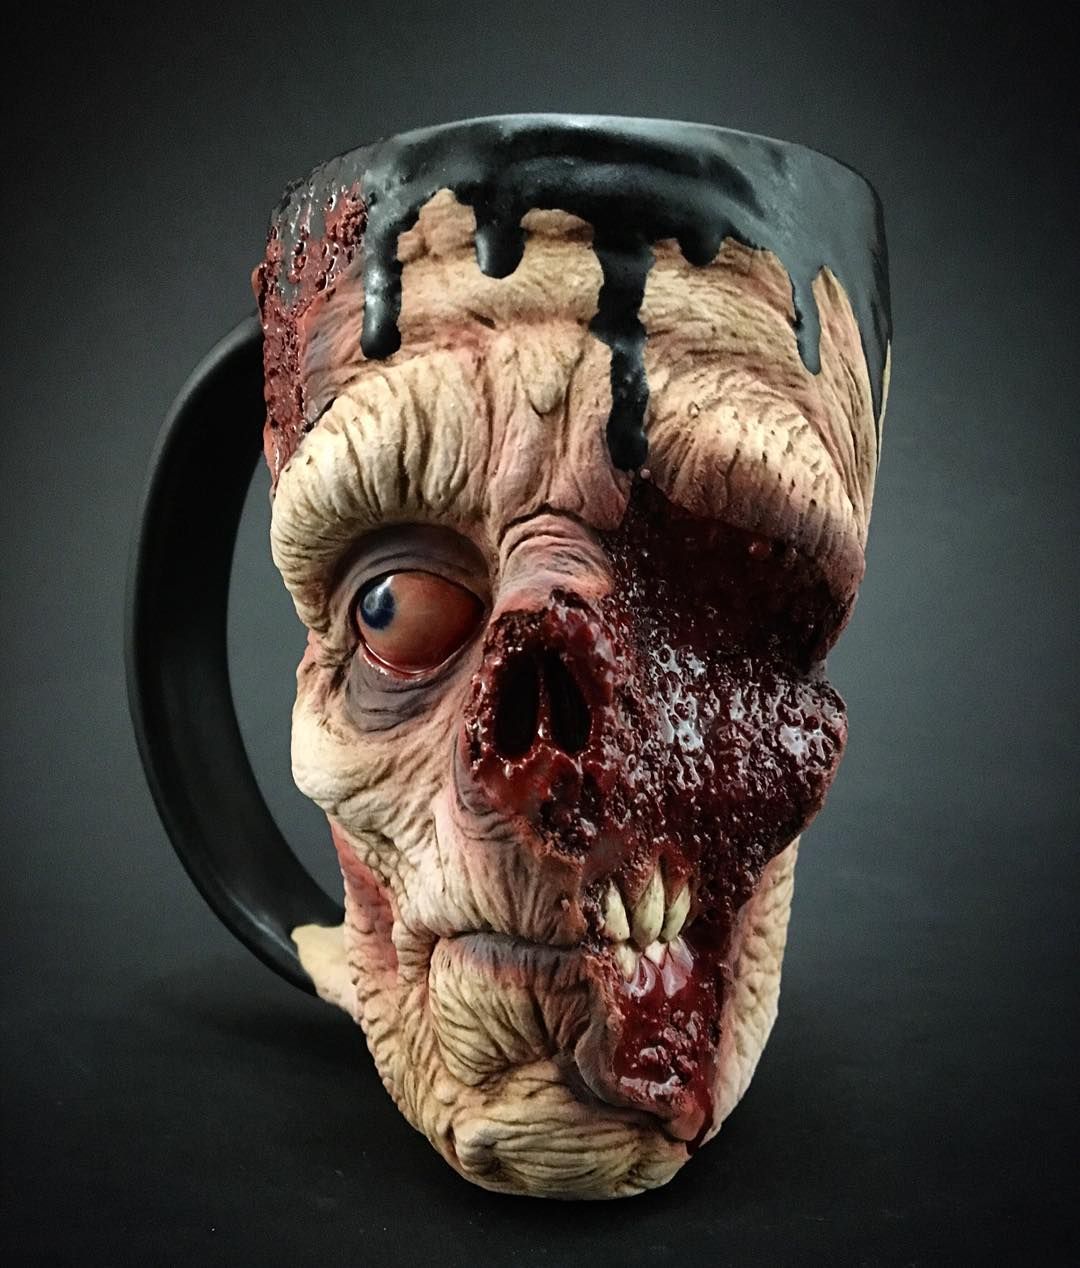 skräck-zombie-mugg-keramik-långsam-joe-kevin-kalkon-merck-2